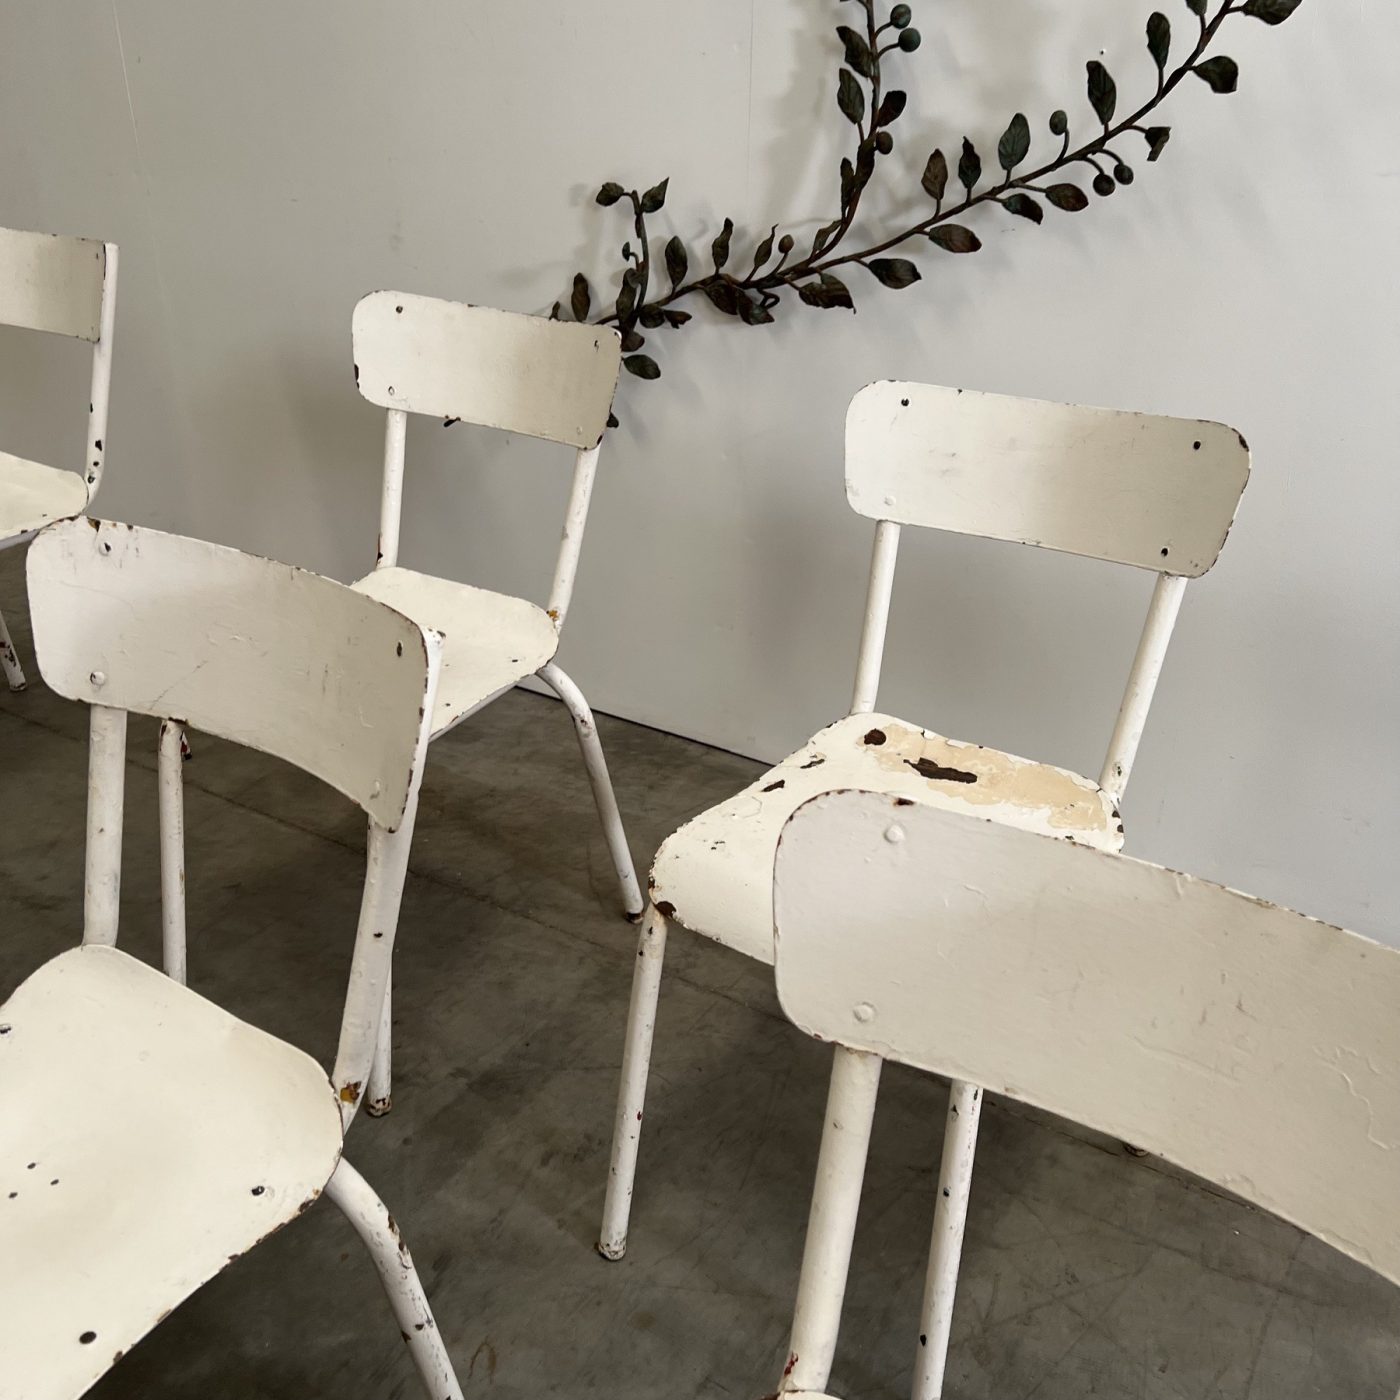 objet-vagabond-metal-chairs0007